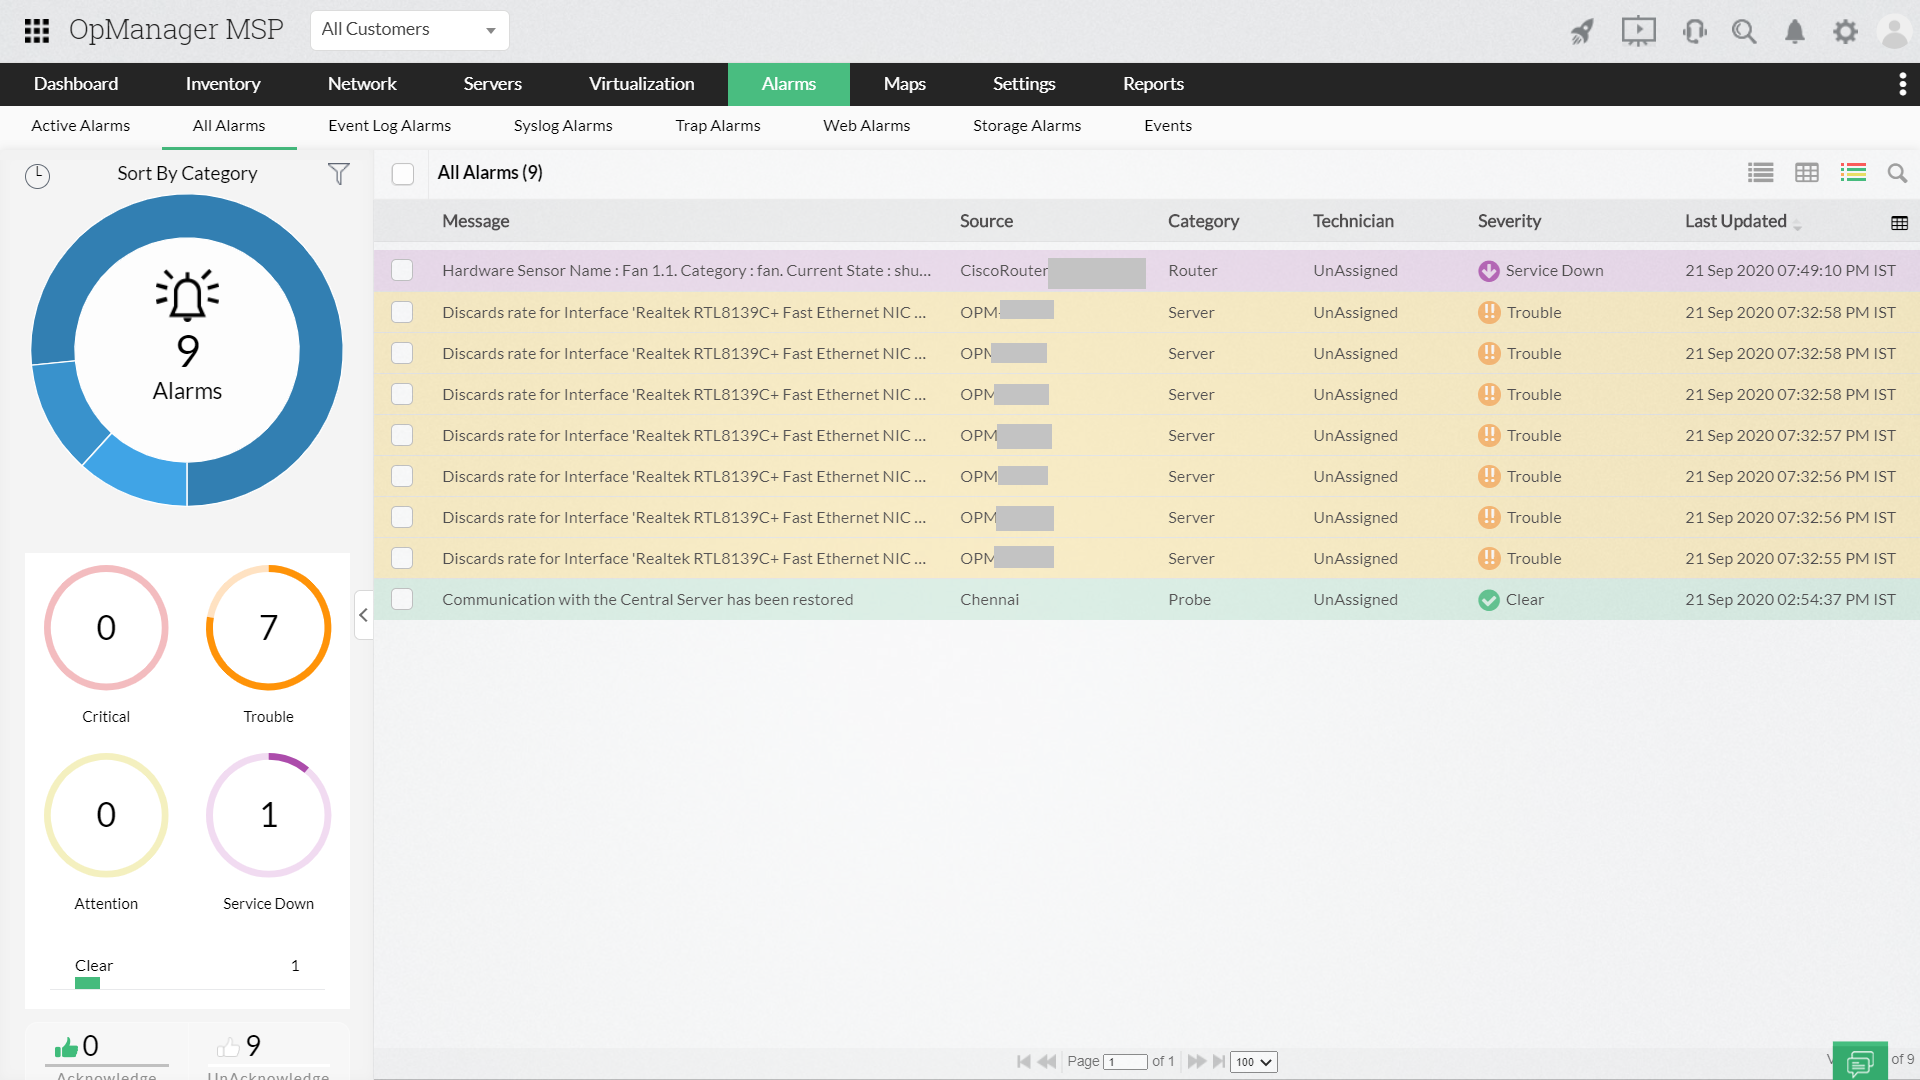 Dashboard de análisis de redes - ManageEngine OpManager MSP